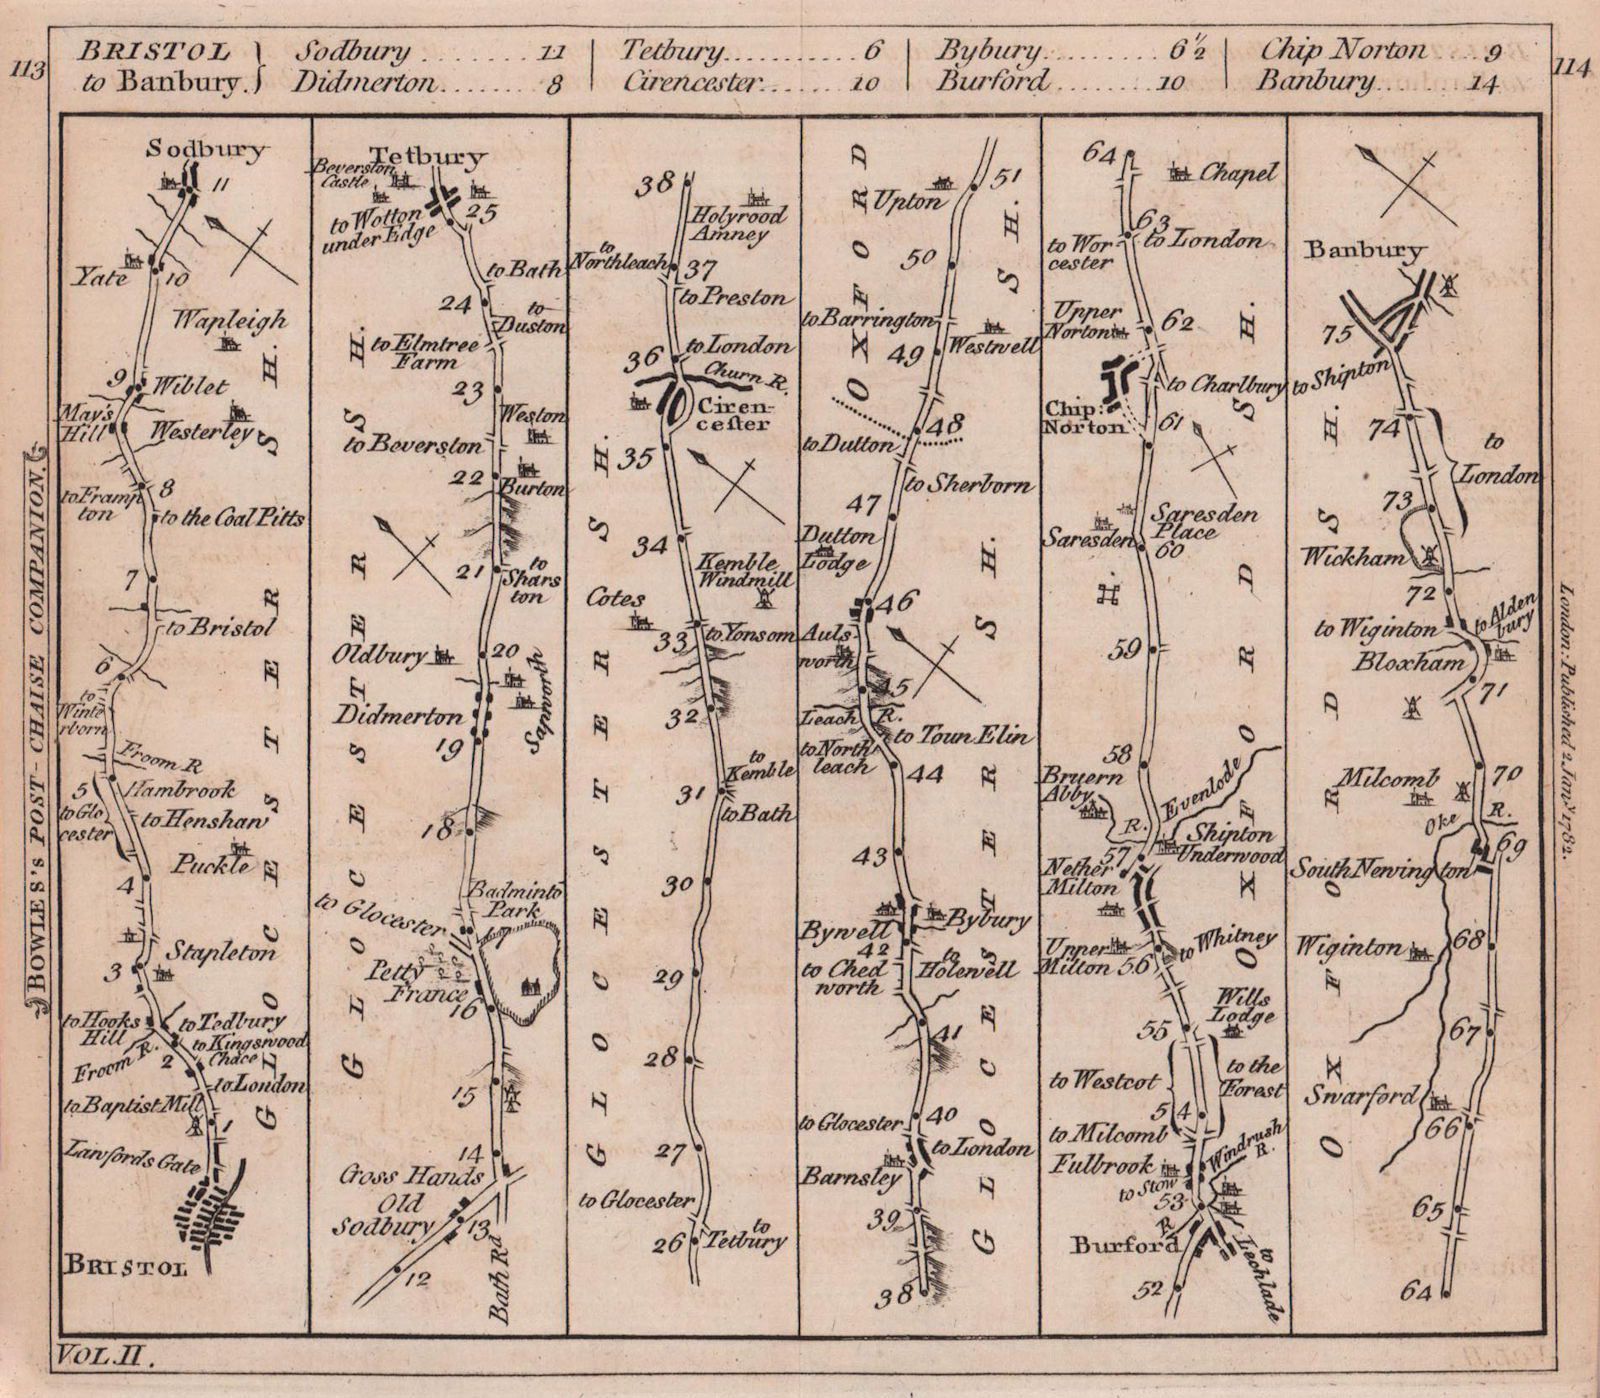 Bristol-Cirencester-Chipping Norton-Banbury road strip map. BOWLES 1782